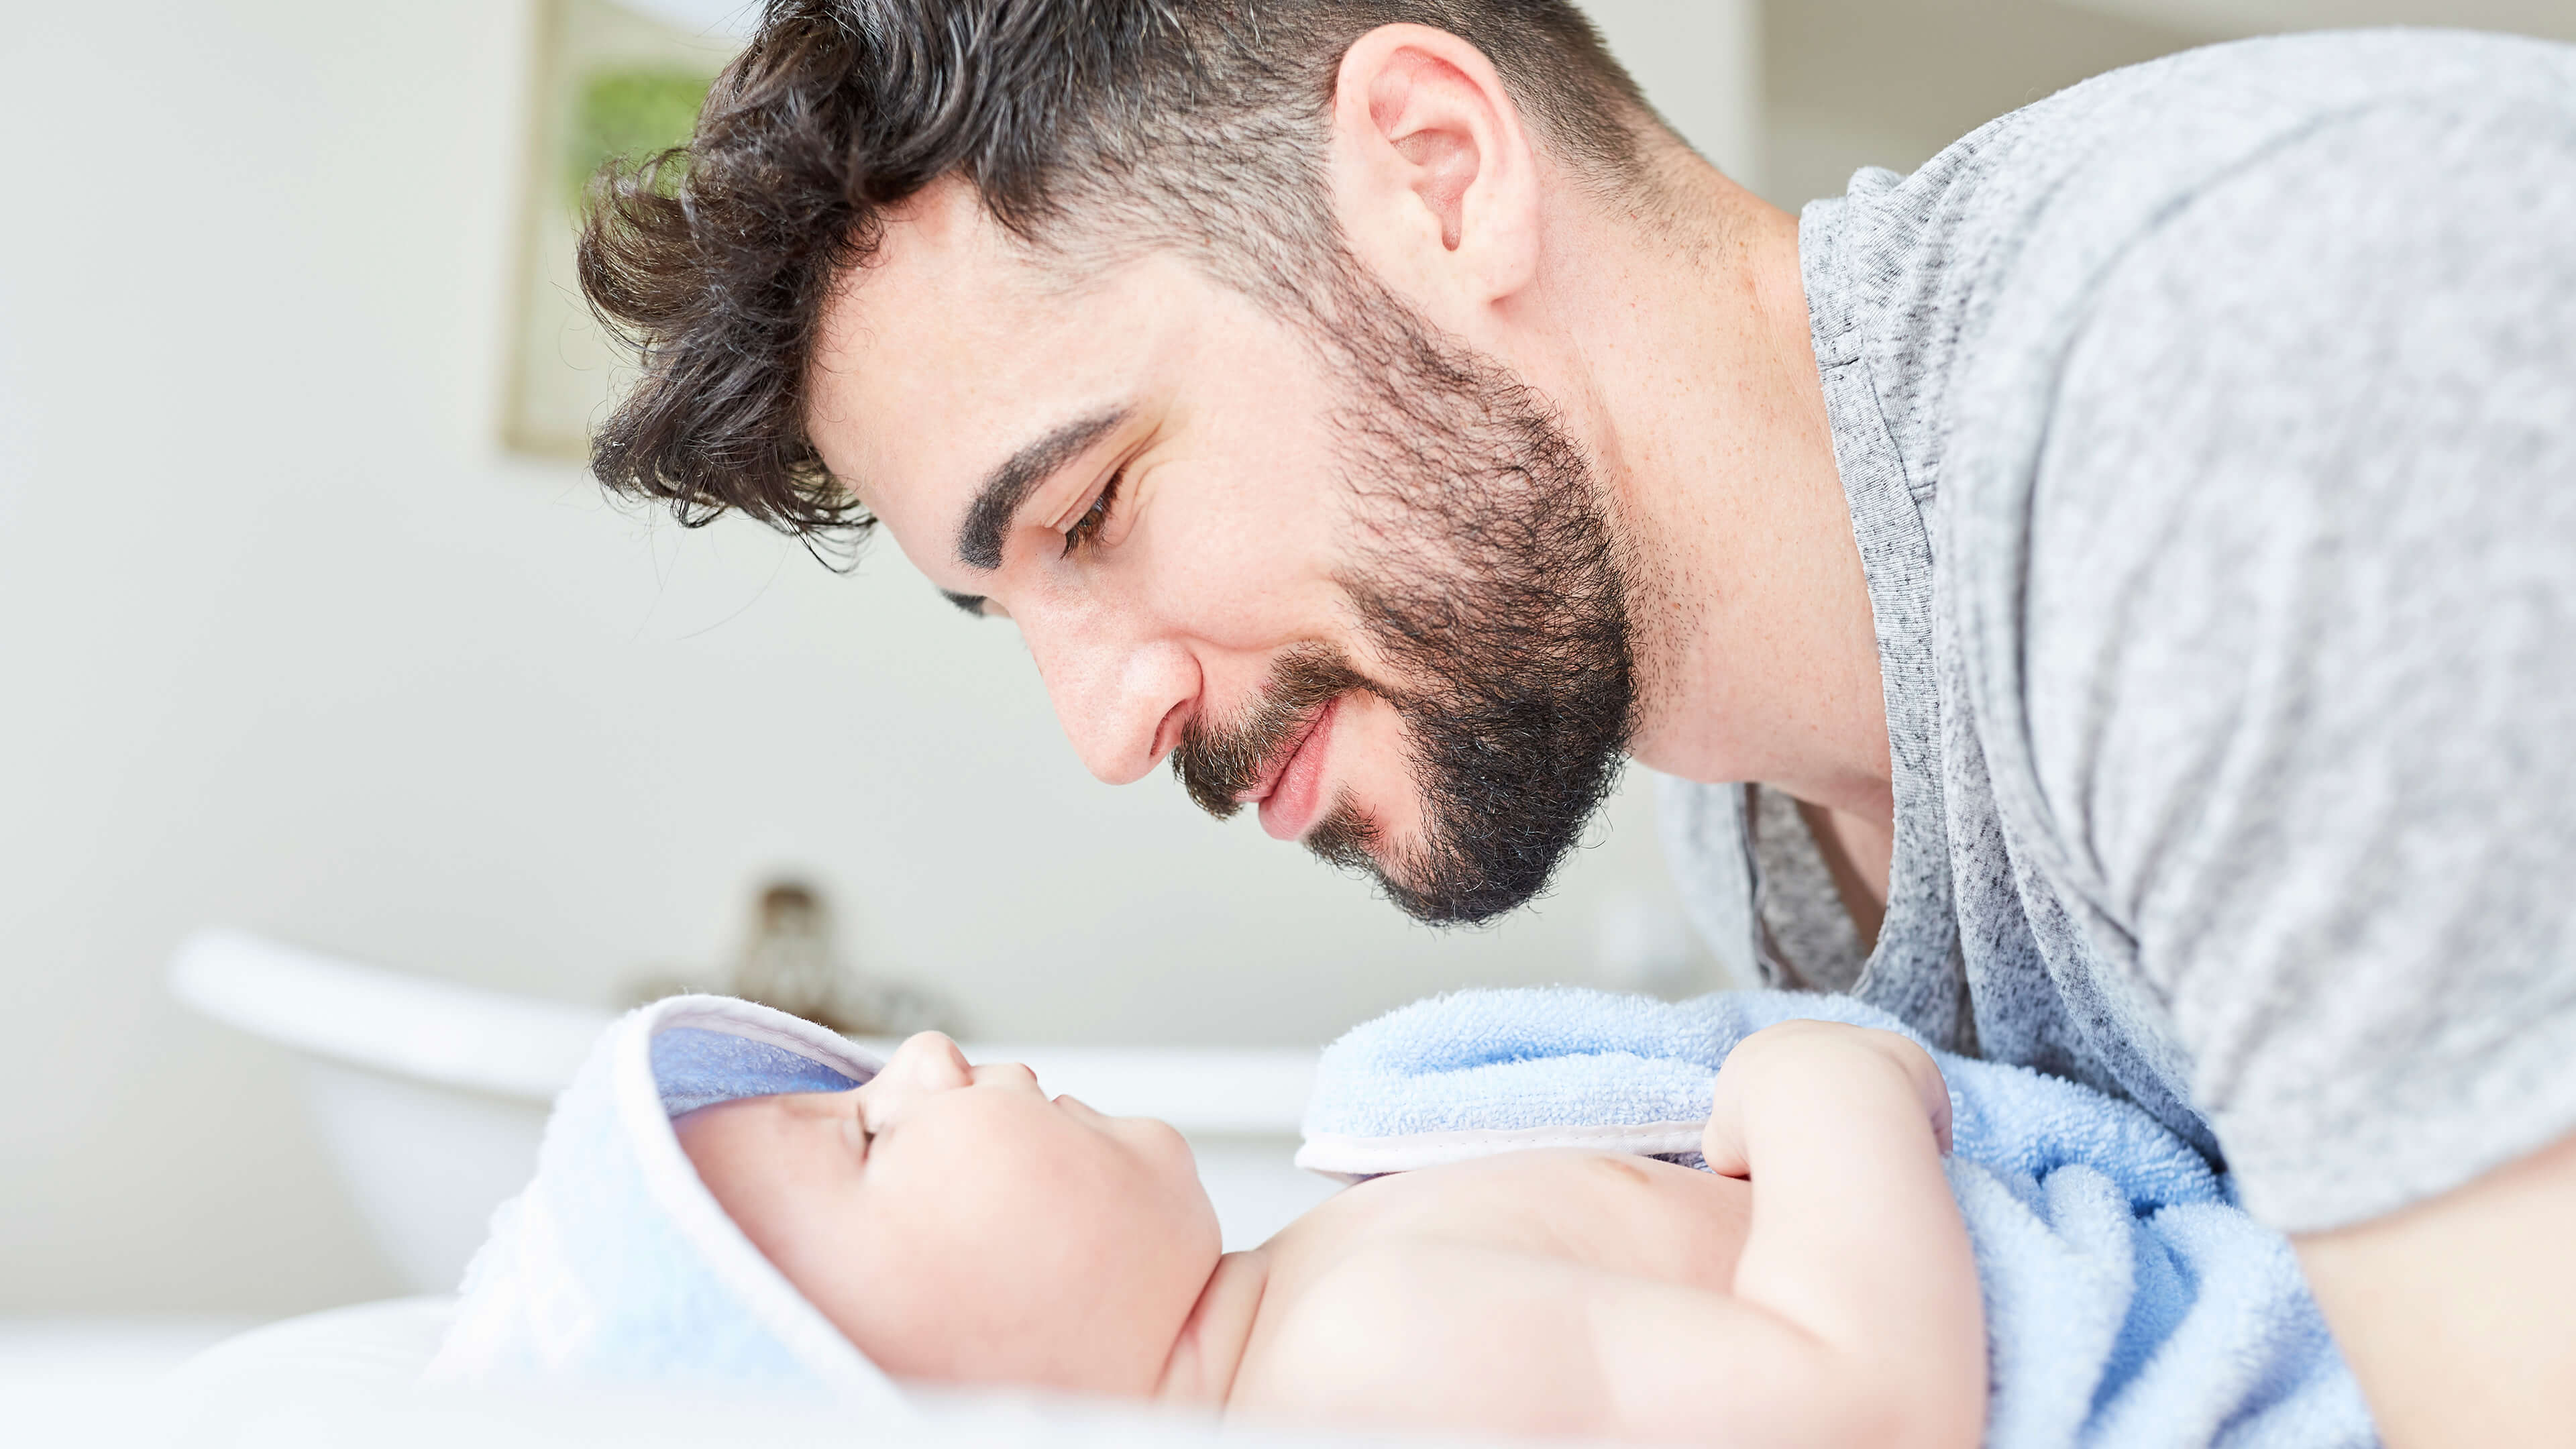 how often should you wash newborn